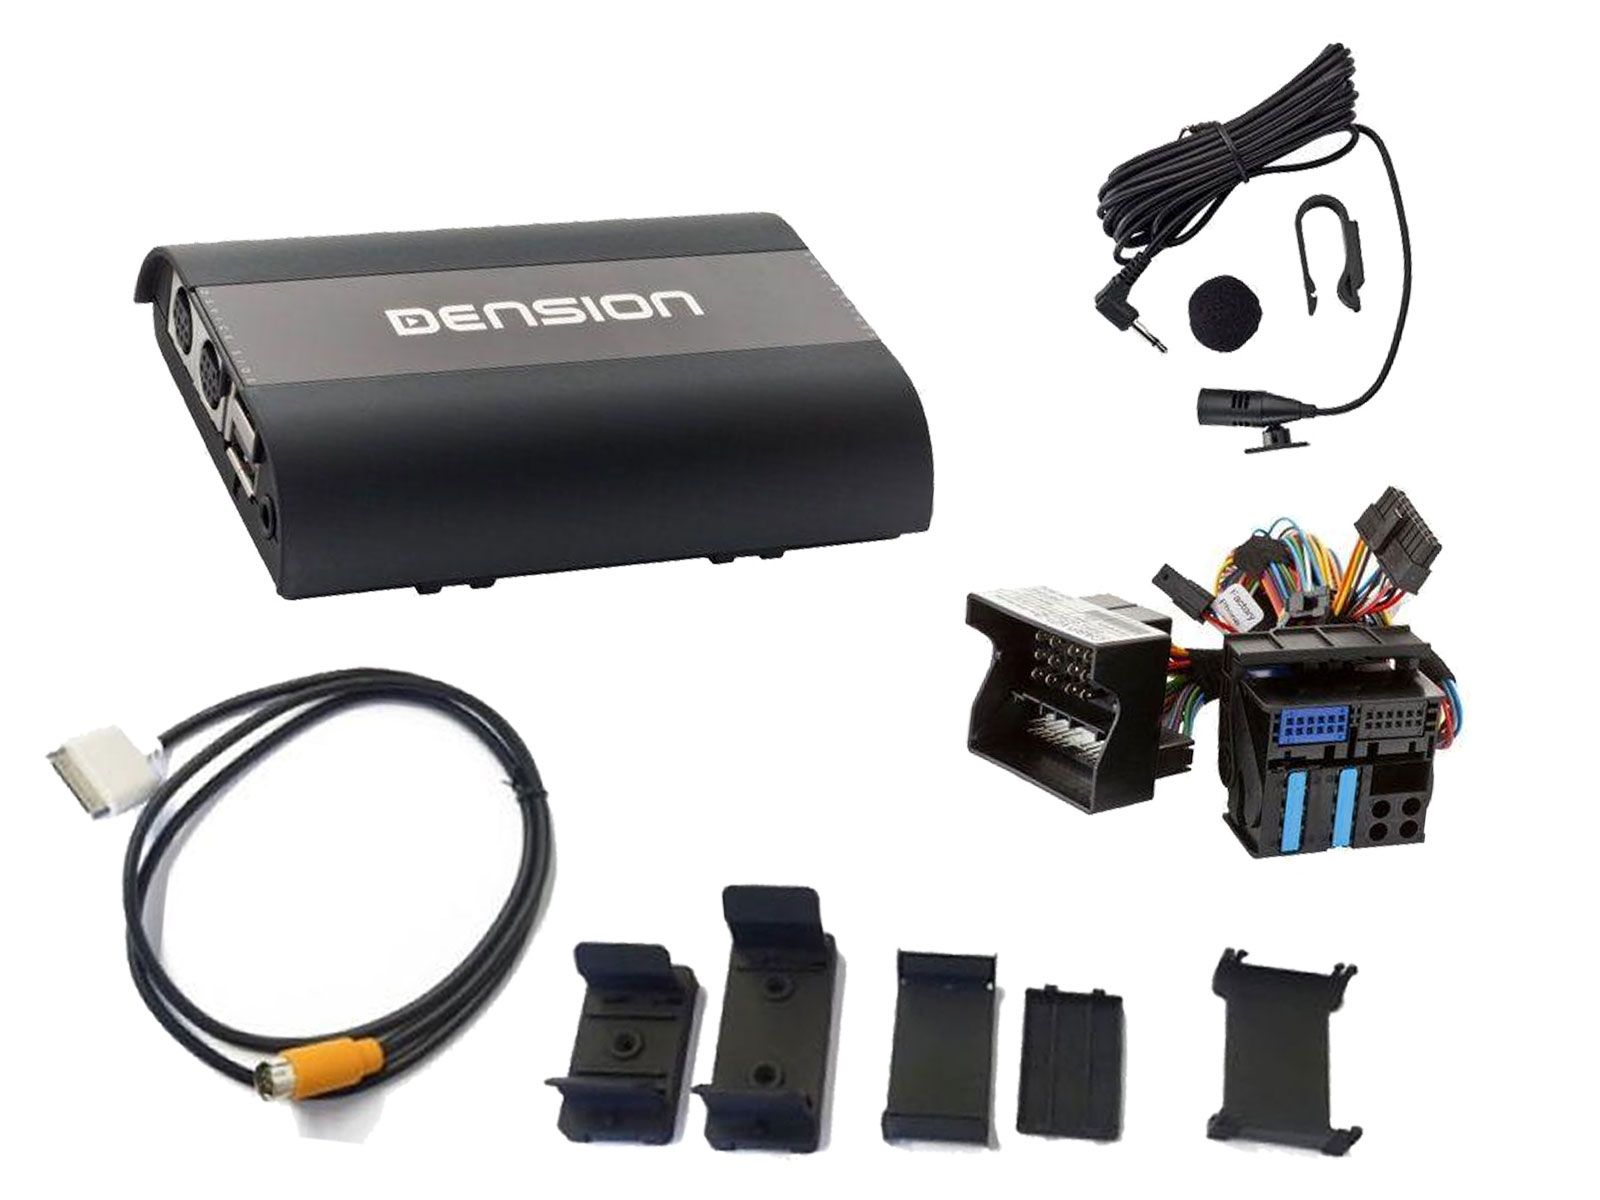 Dension Gateway Pro BT + Dock Cable - Bluetooth / iPod / iPhone / USB Interface - VW - Quadlock